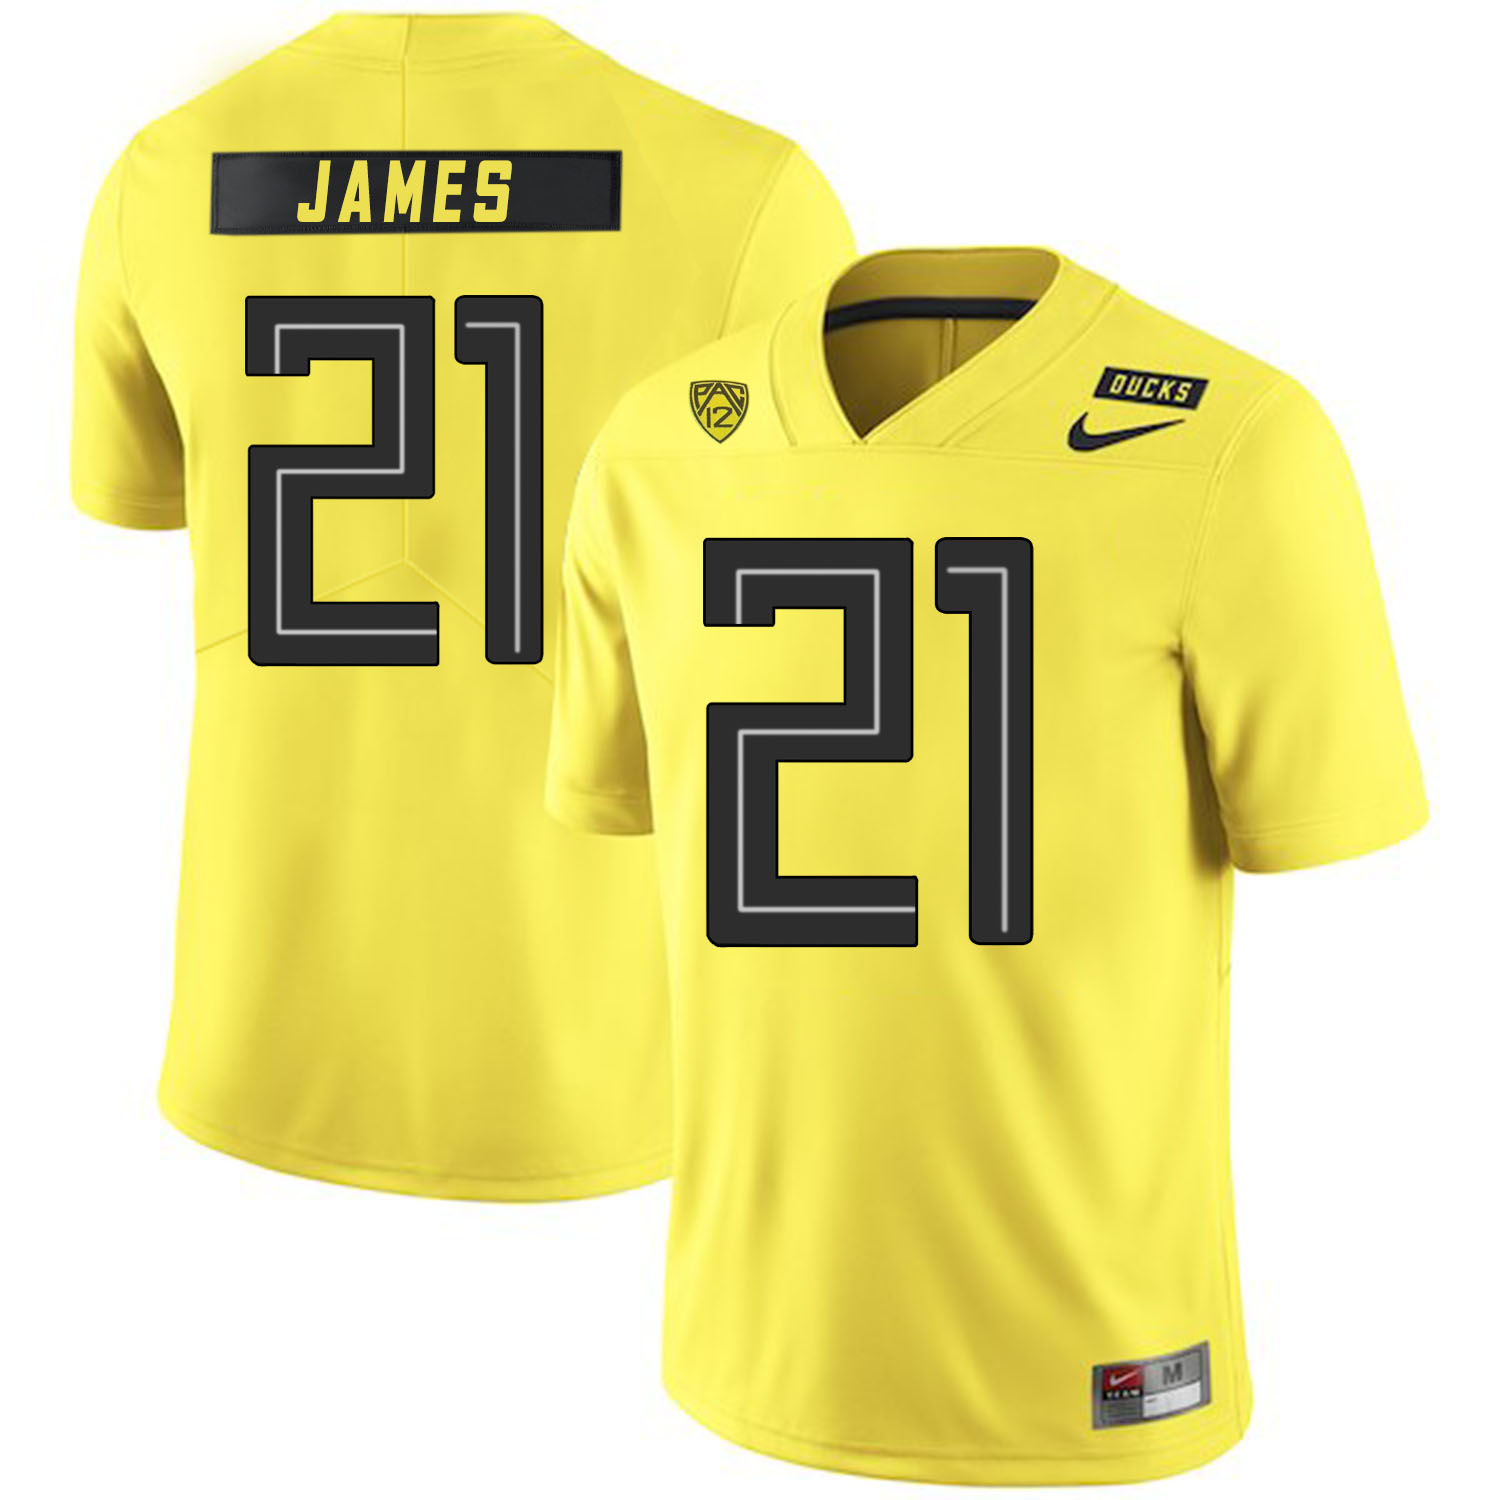 regon Ducks 21 LaMichael James Yellow Nike College Football Jersey